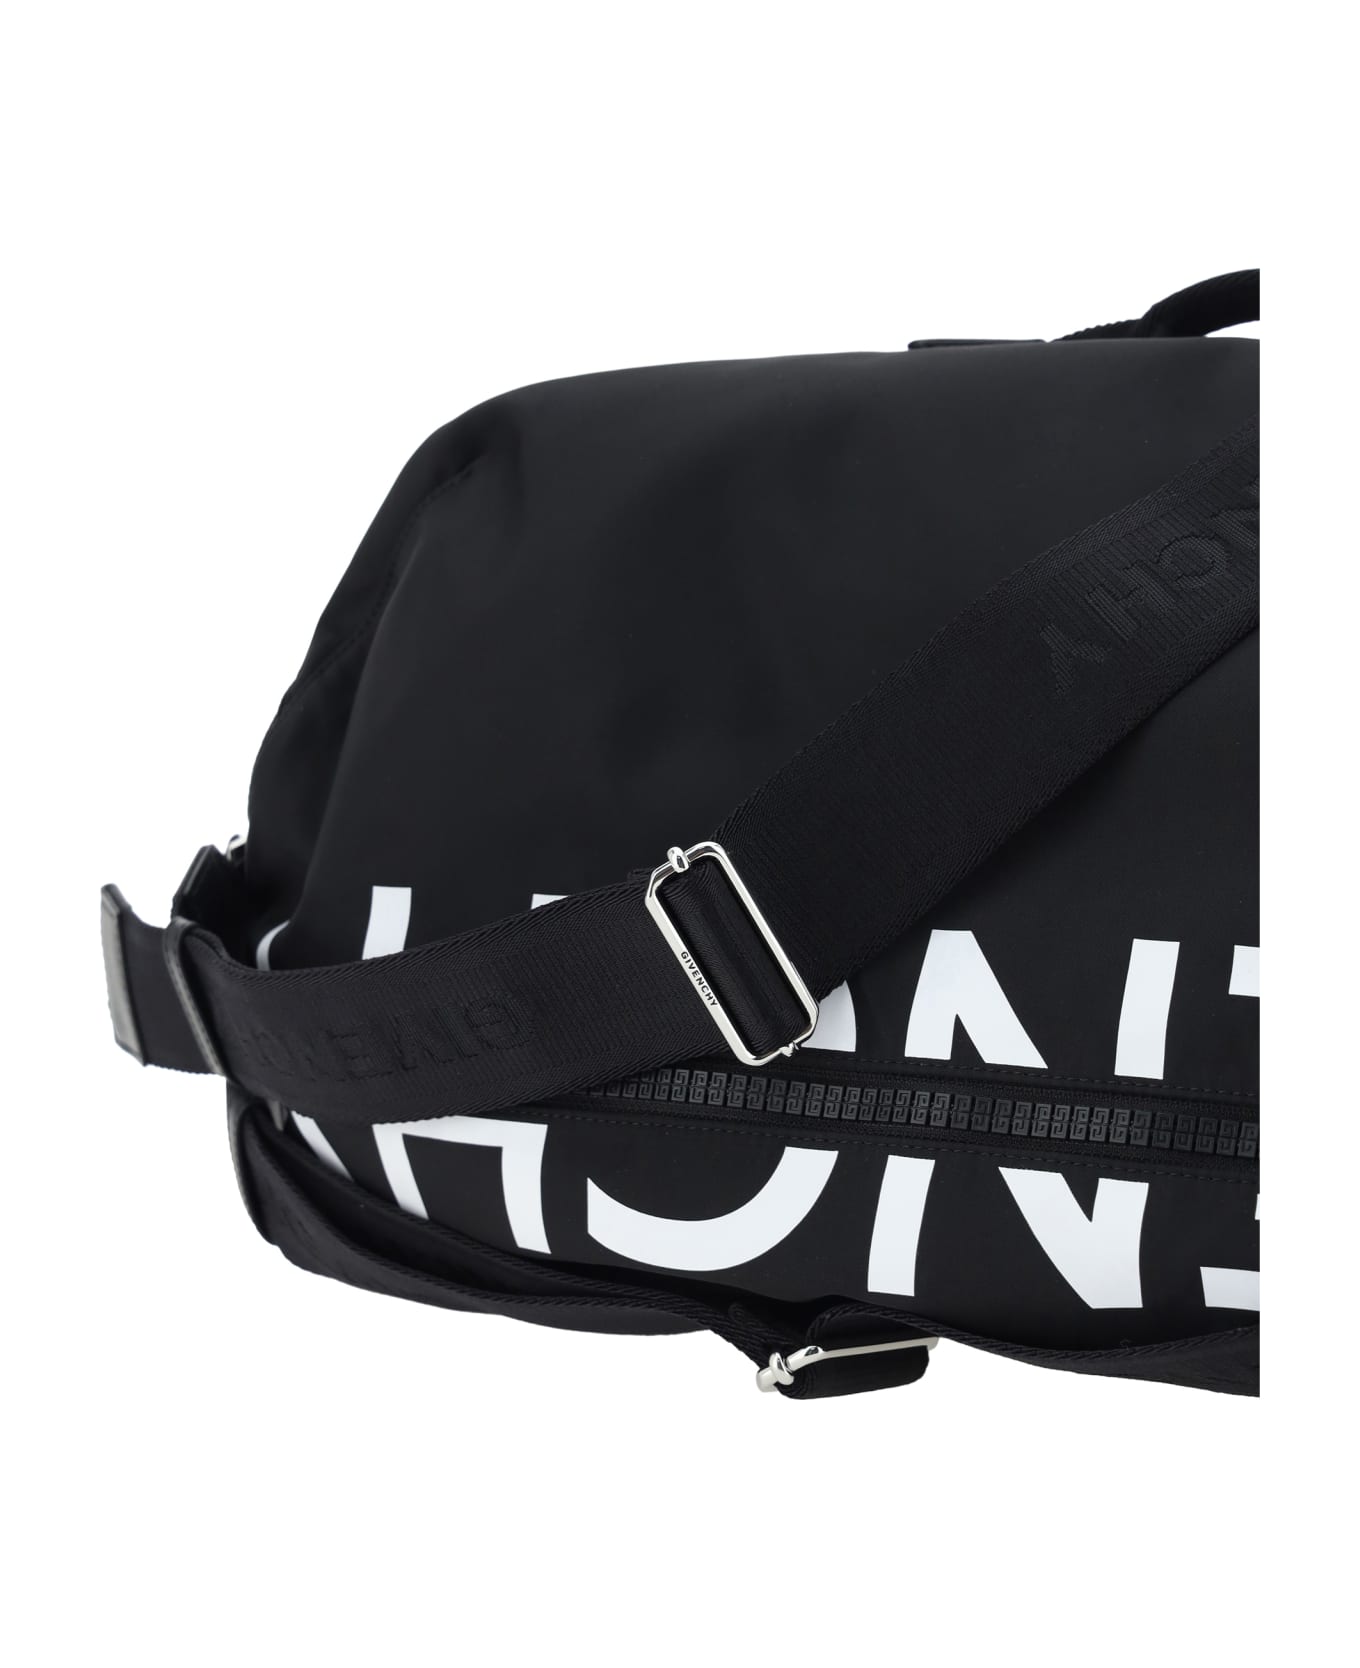 Givenchy G-zip Logo Printed Backpack - Black/white バックパック